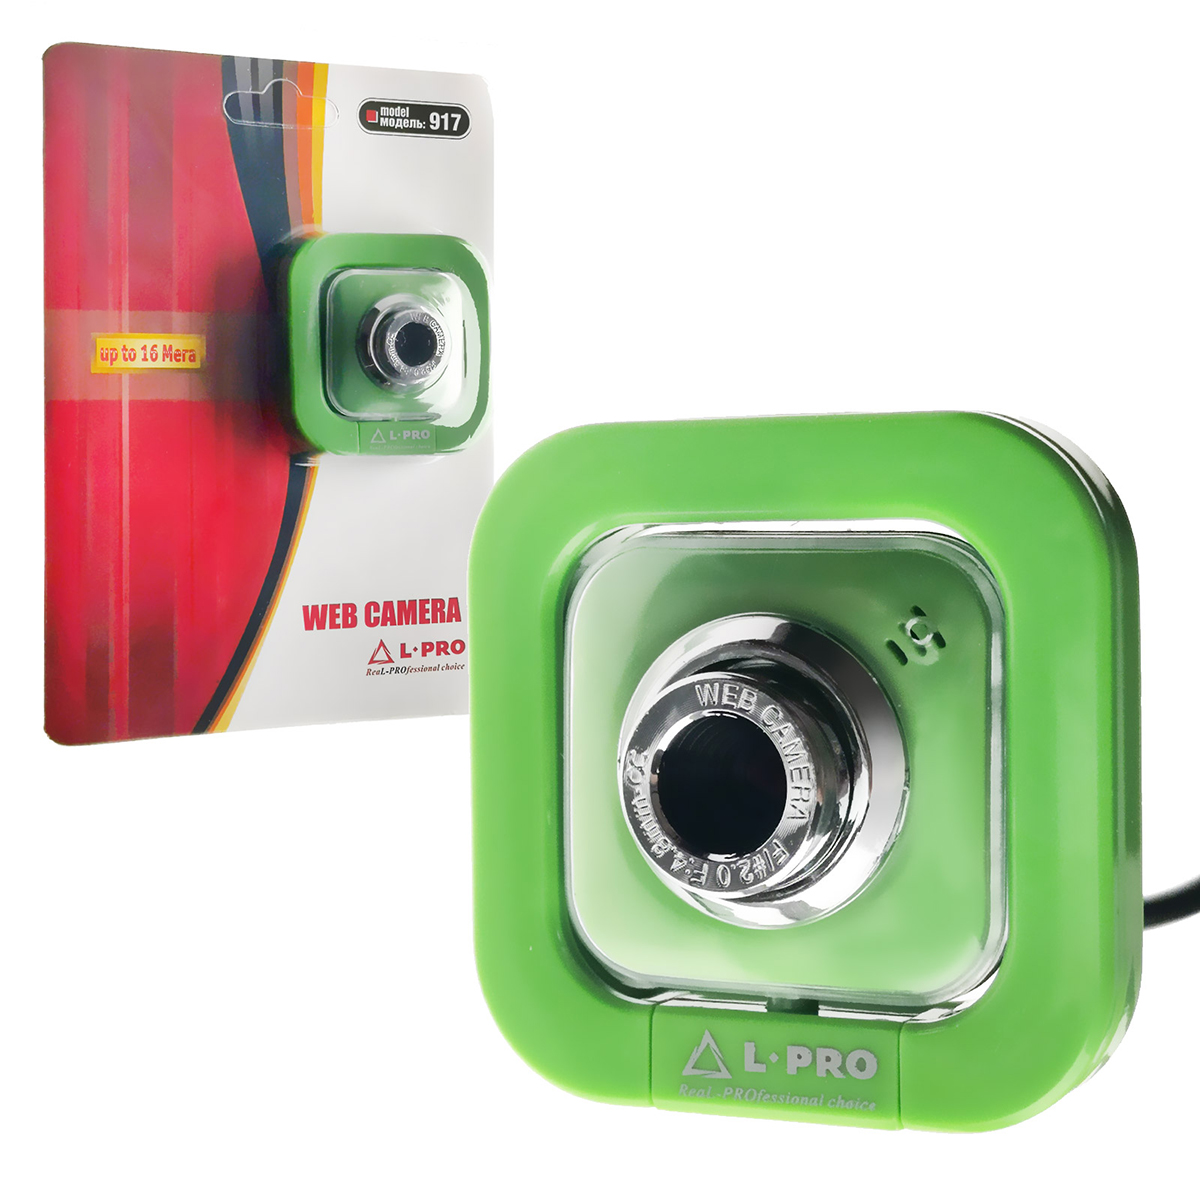 Веб-камера L-PRO 917/1406, CMOS, 640x480, 0.3Мп, USB, цвет зеленый.